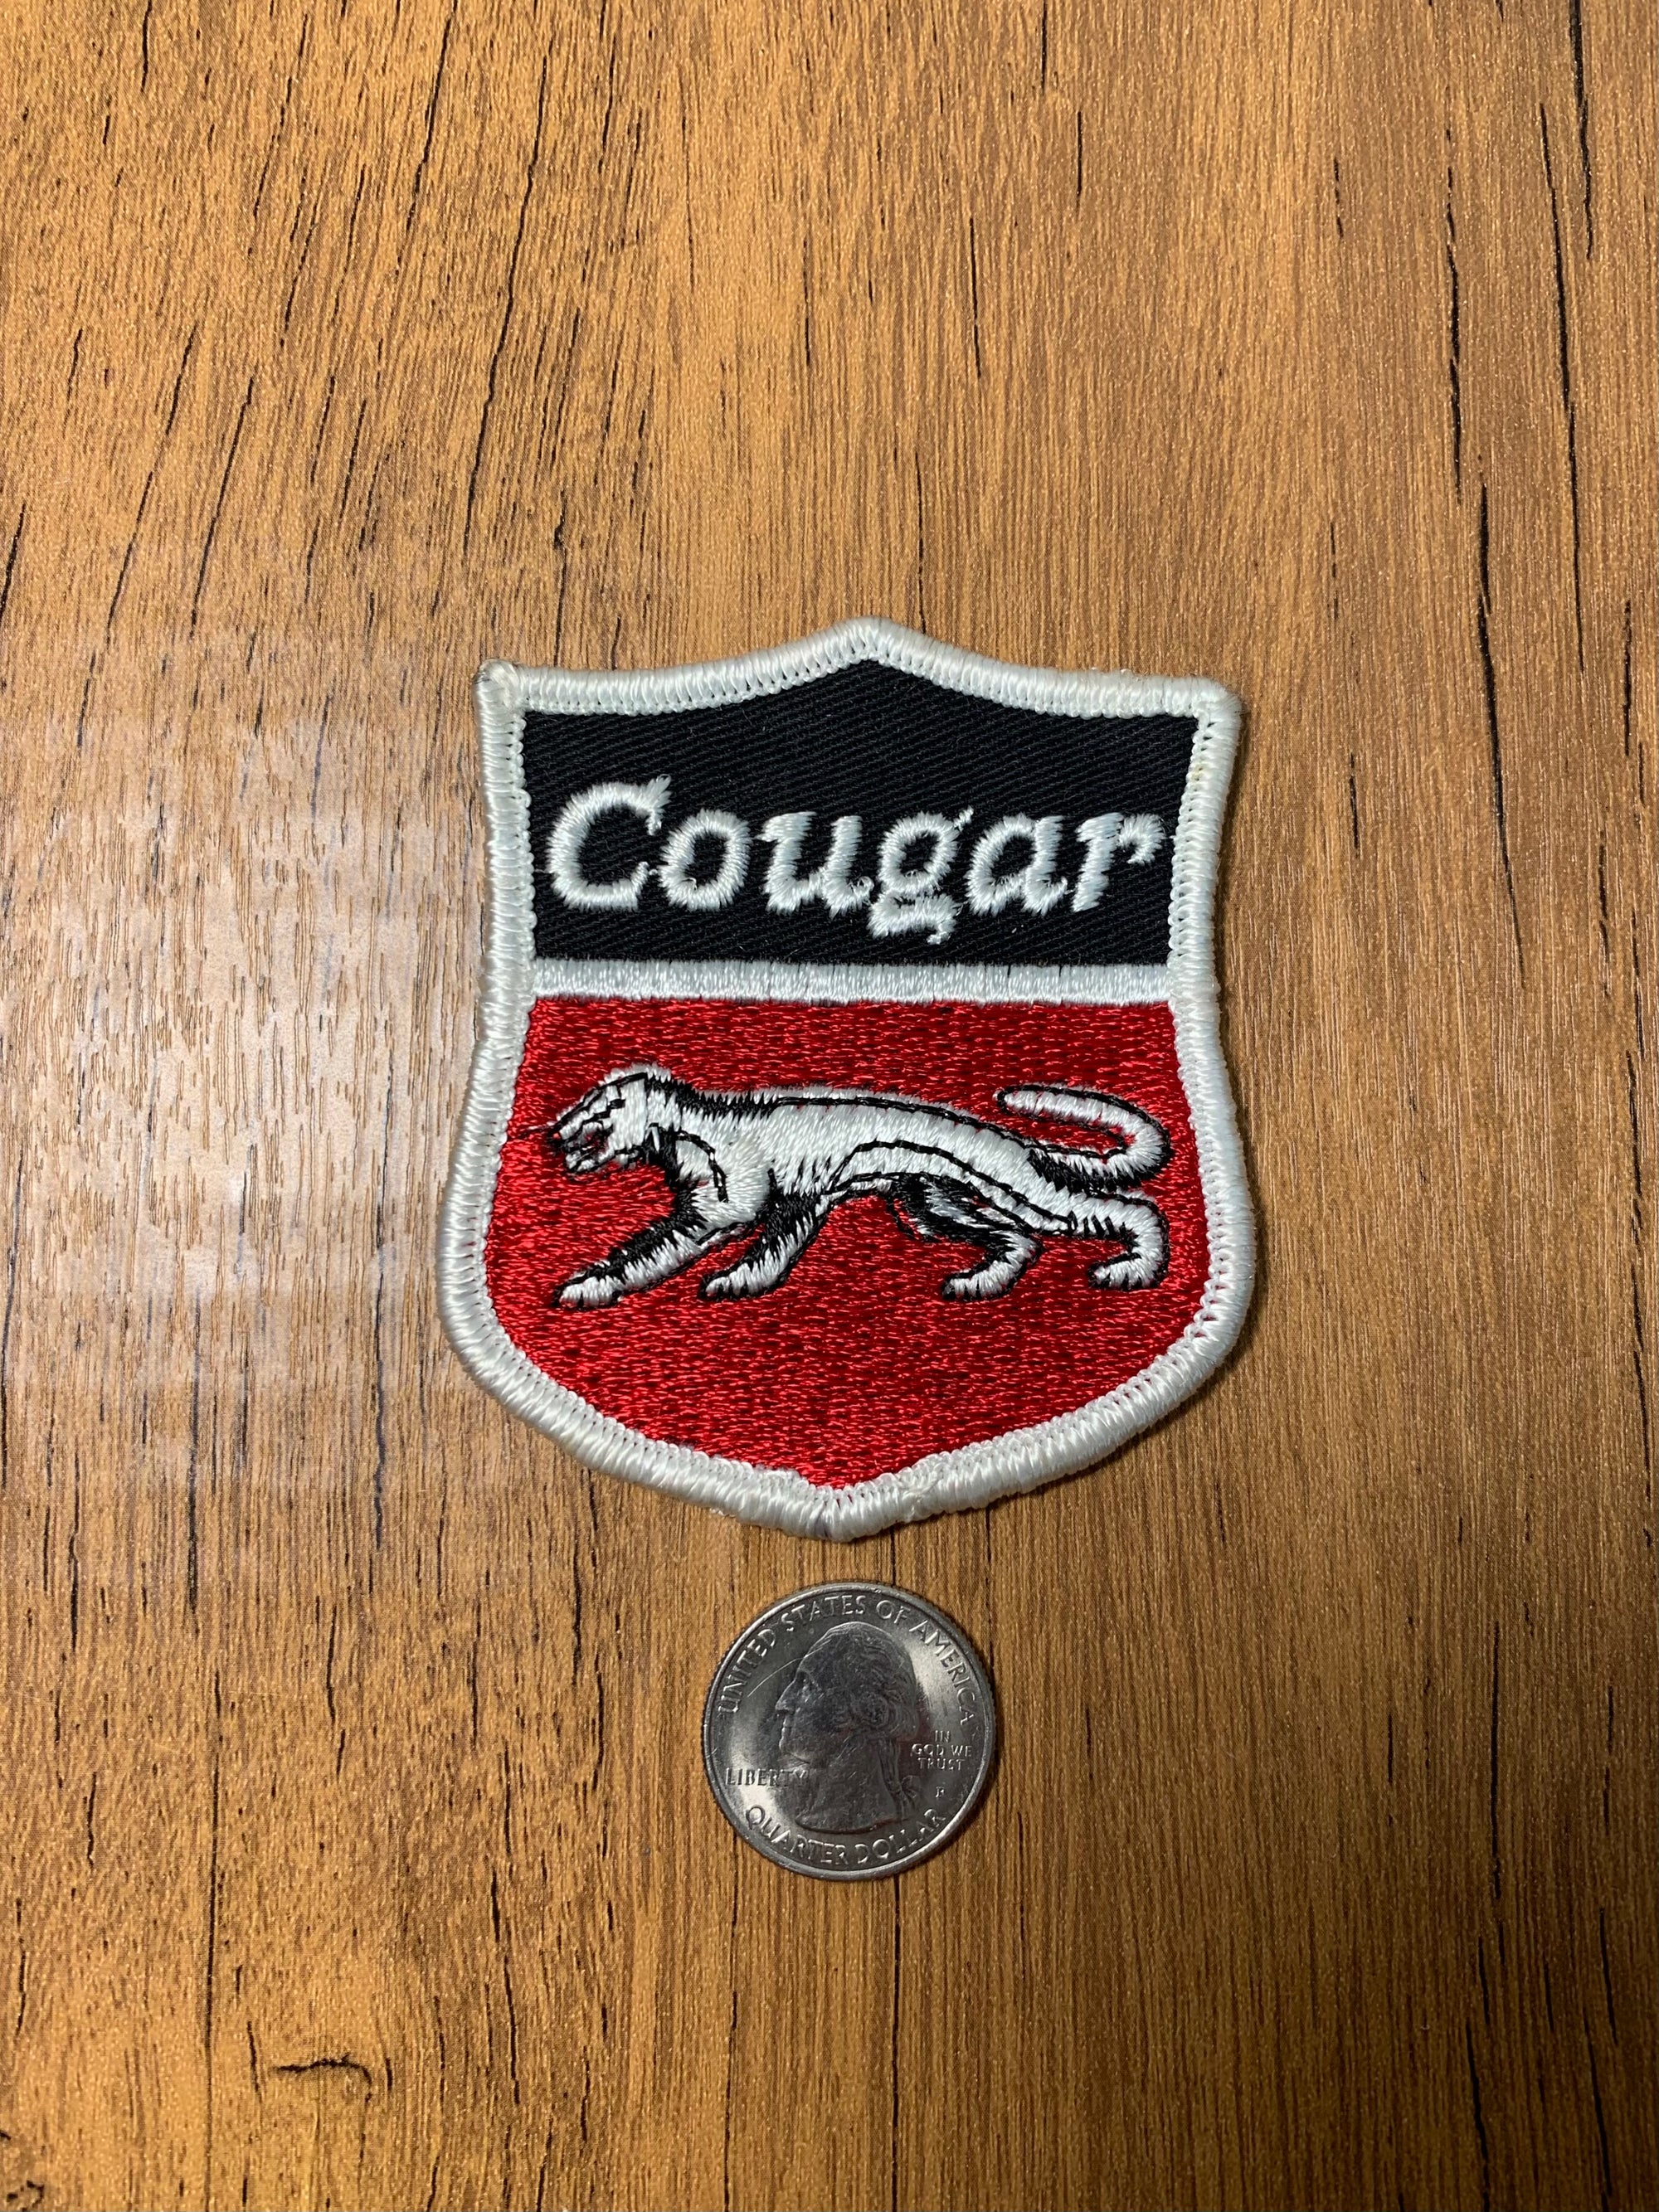 Vintage Cougar